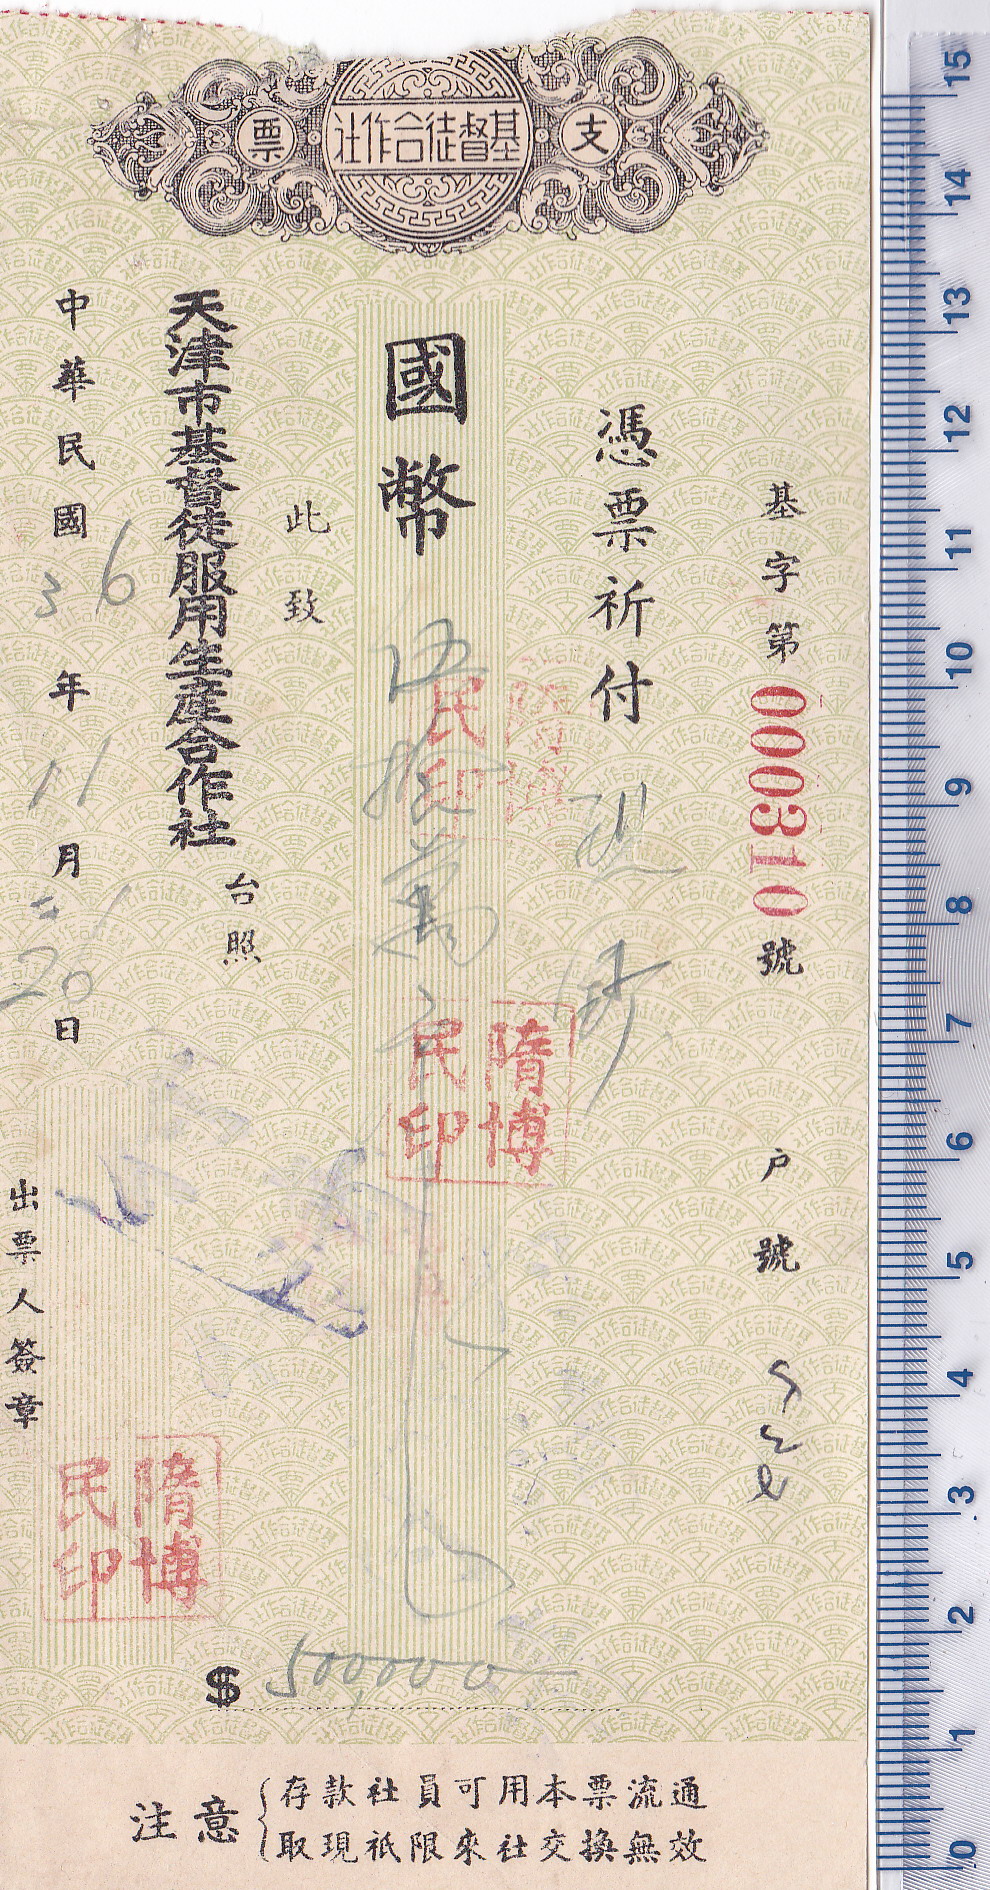 D1725, Check of Jiangsu Farmer's Bank, China 1940's Unused Cheque